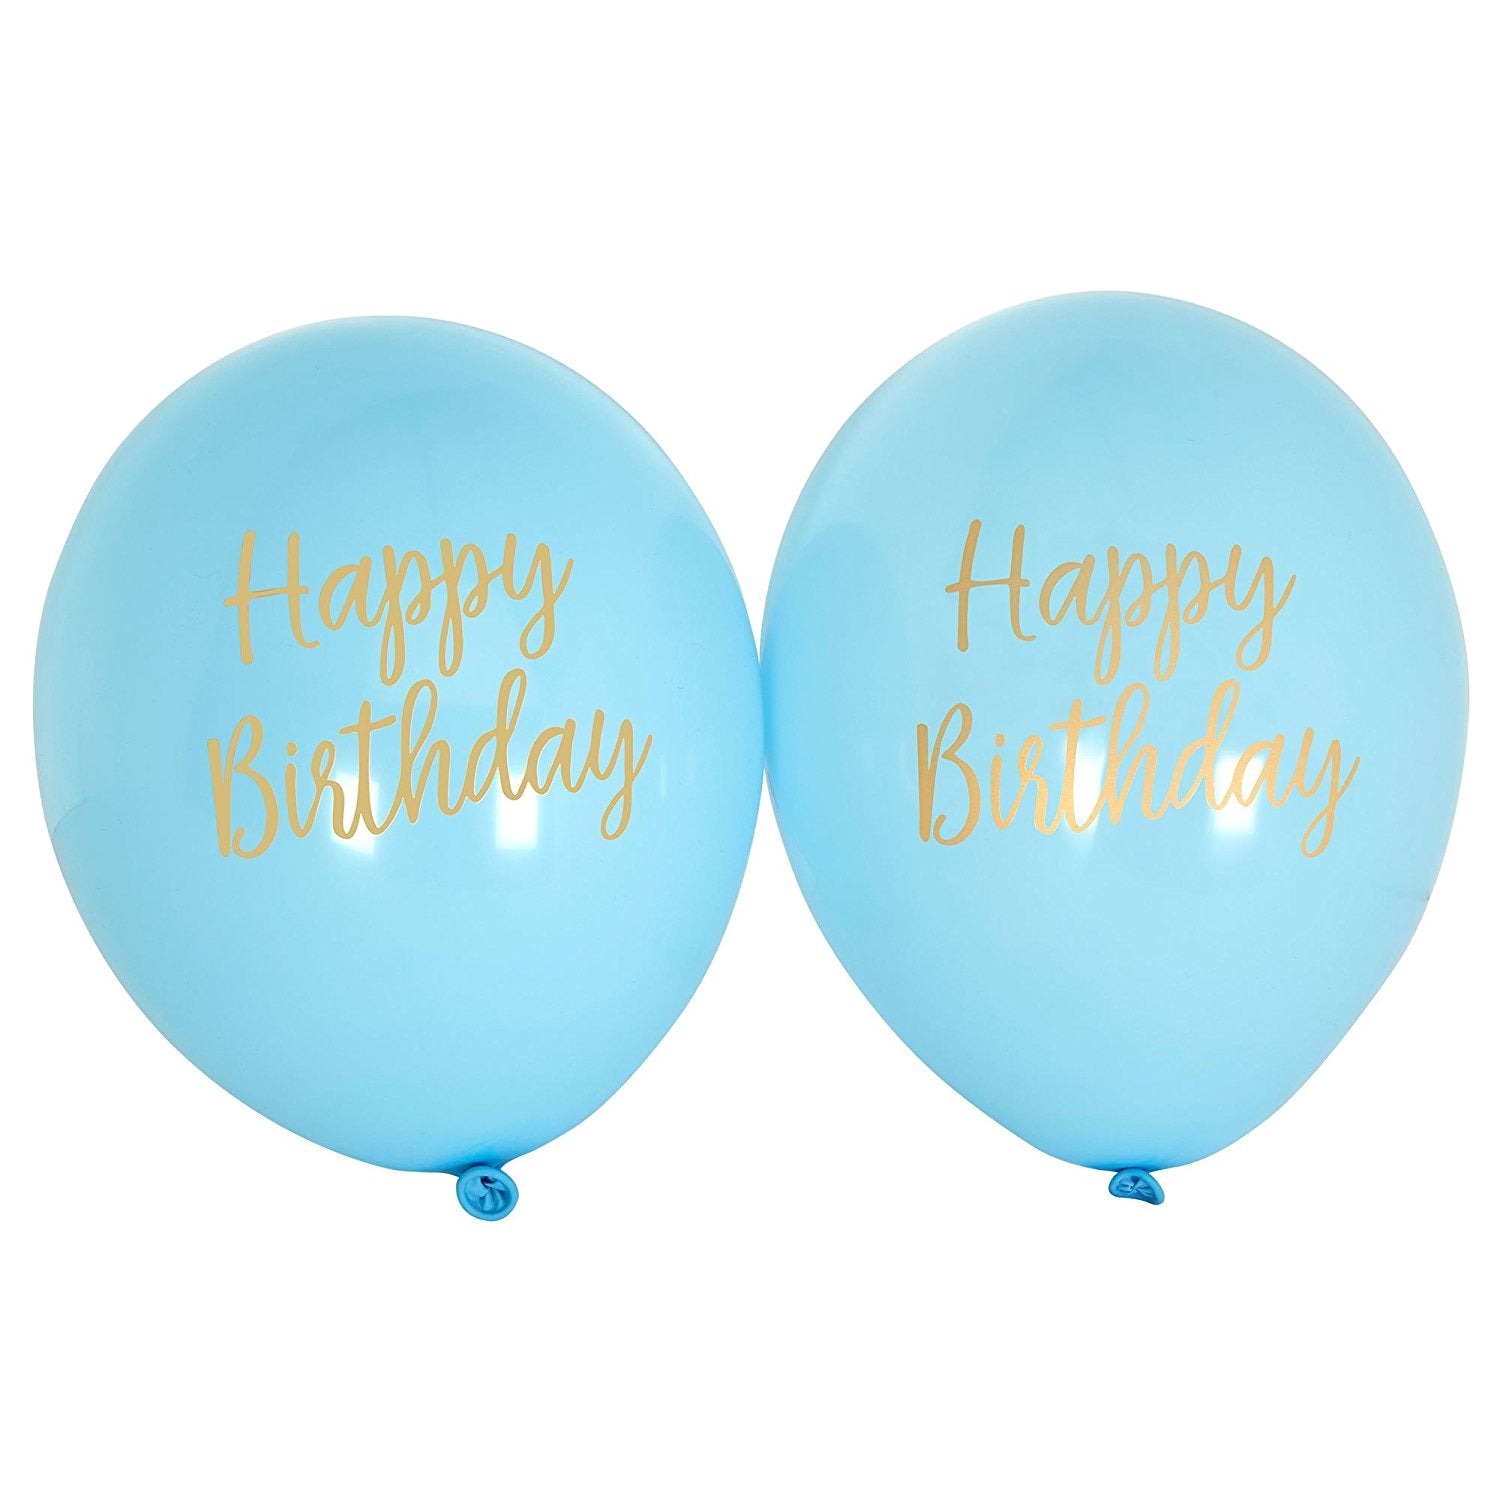 Ballon Happy Birthday, blau-gold, 8 Stk.